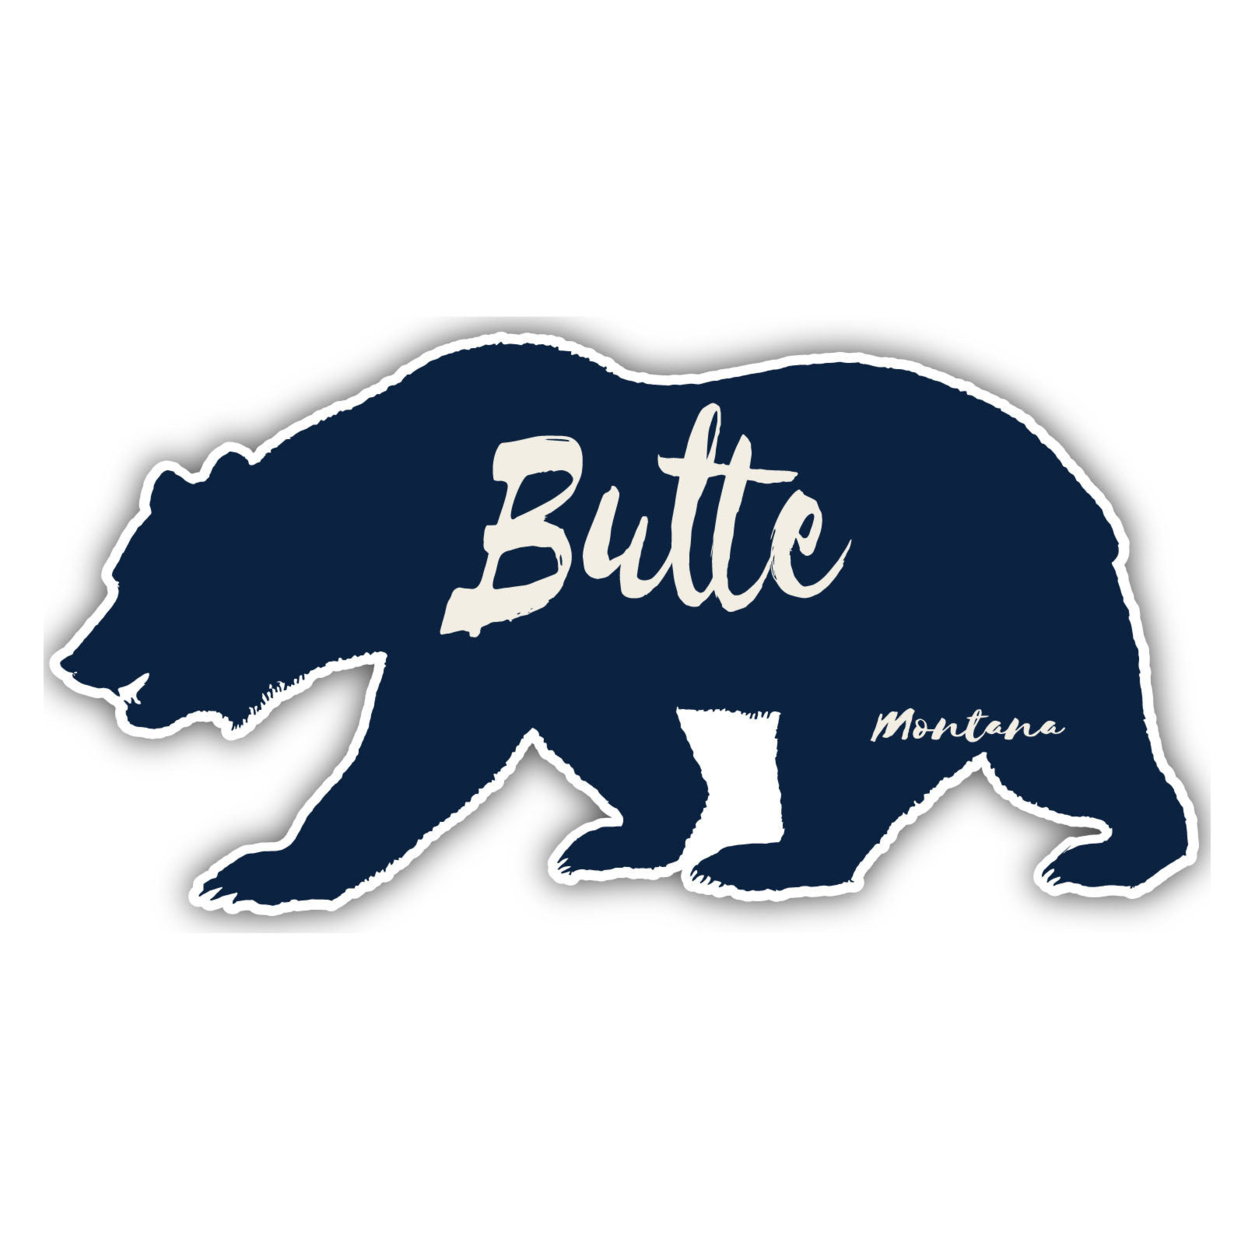 Butte Montana Souvenir Decorative Stickers (Choose Theme And Size) - Single Unit, 10-Inch, Camp Life